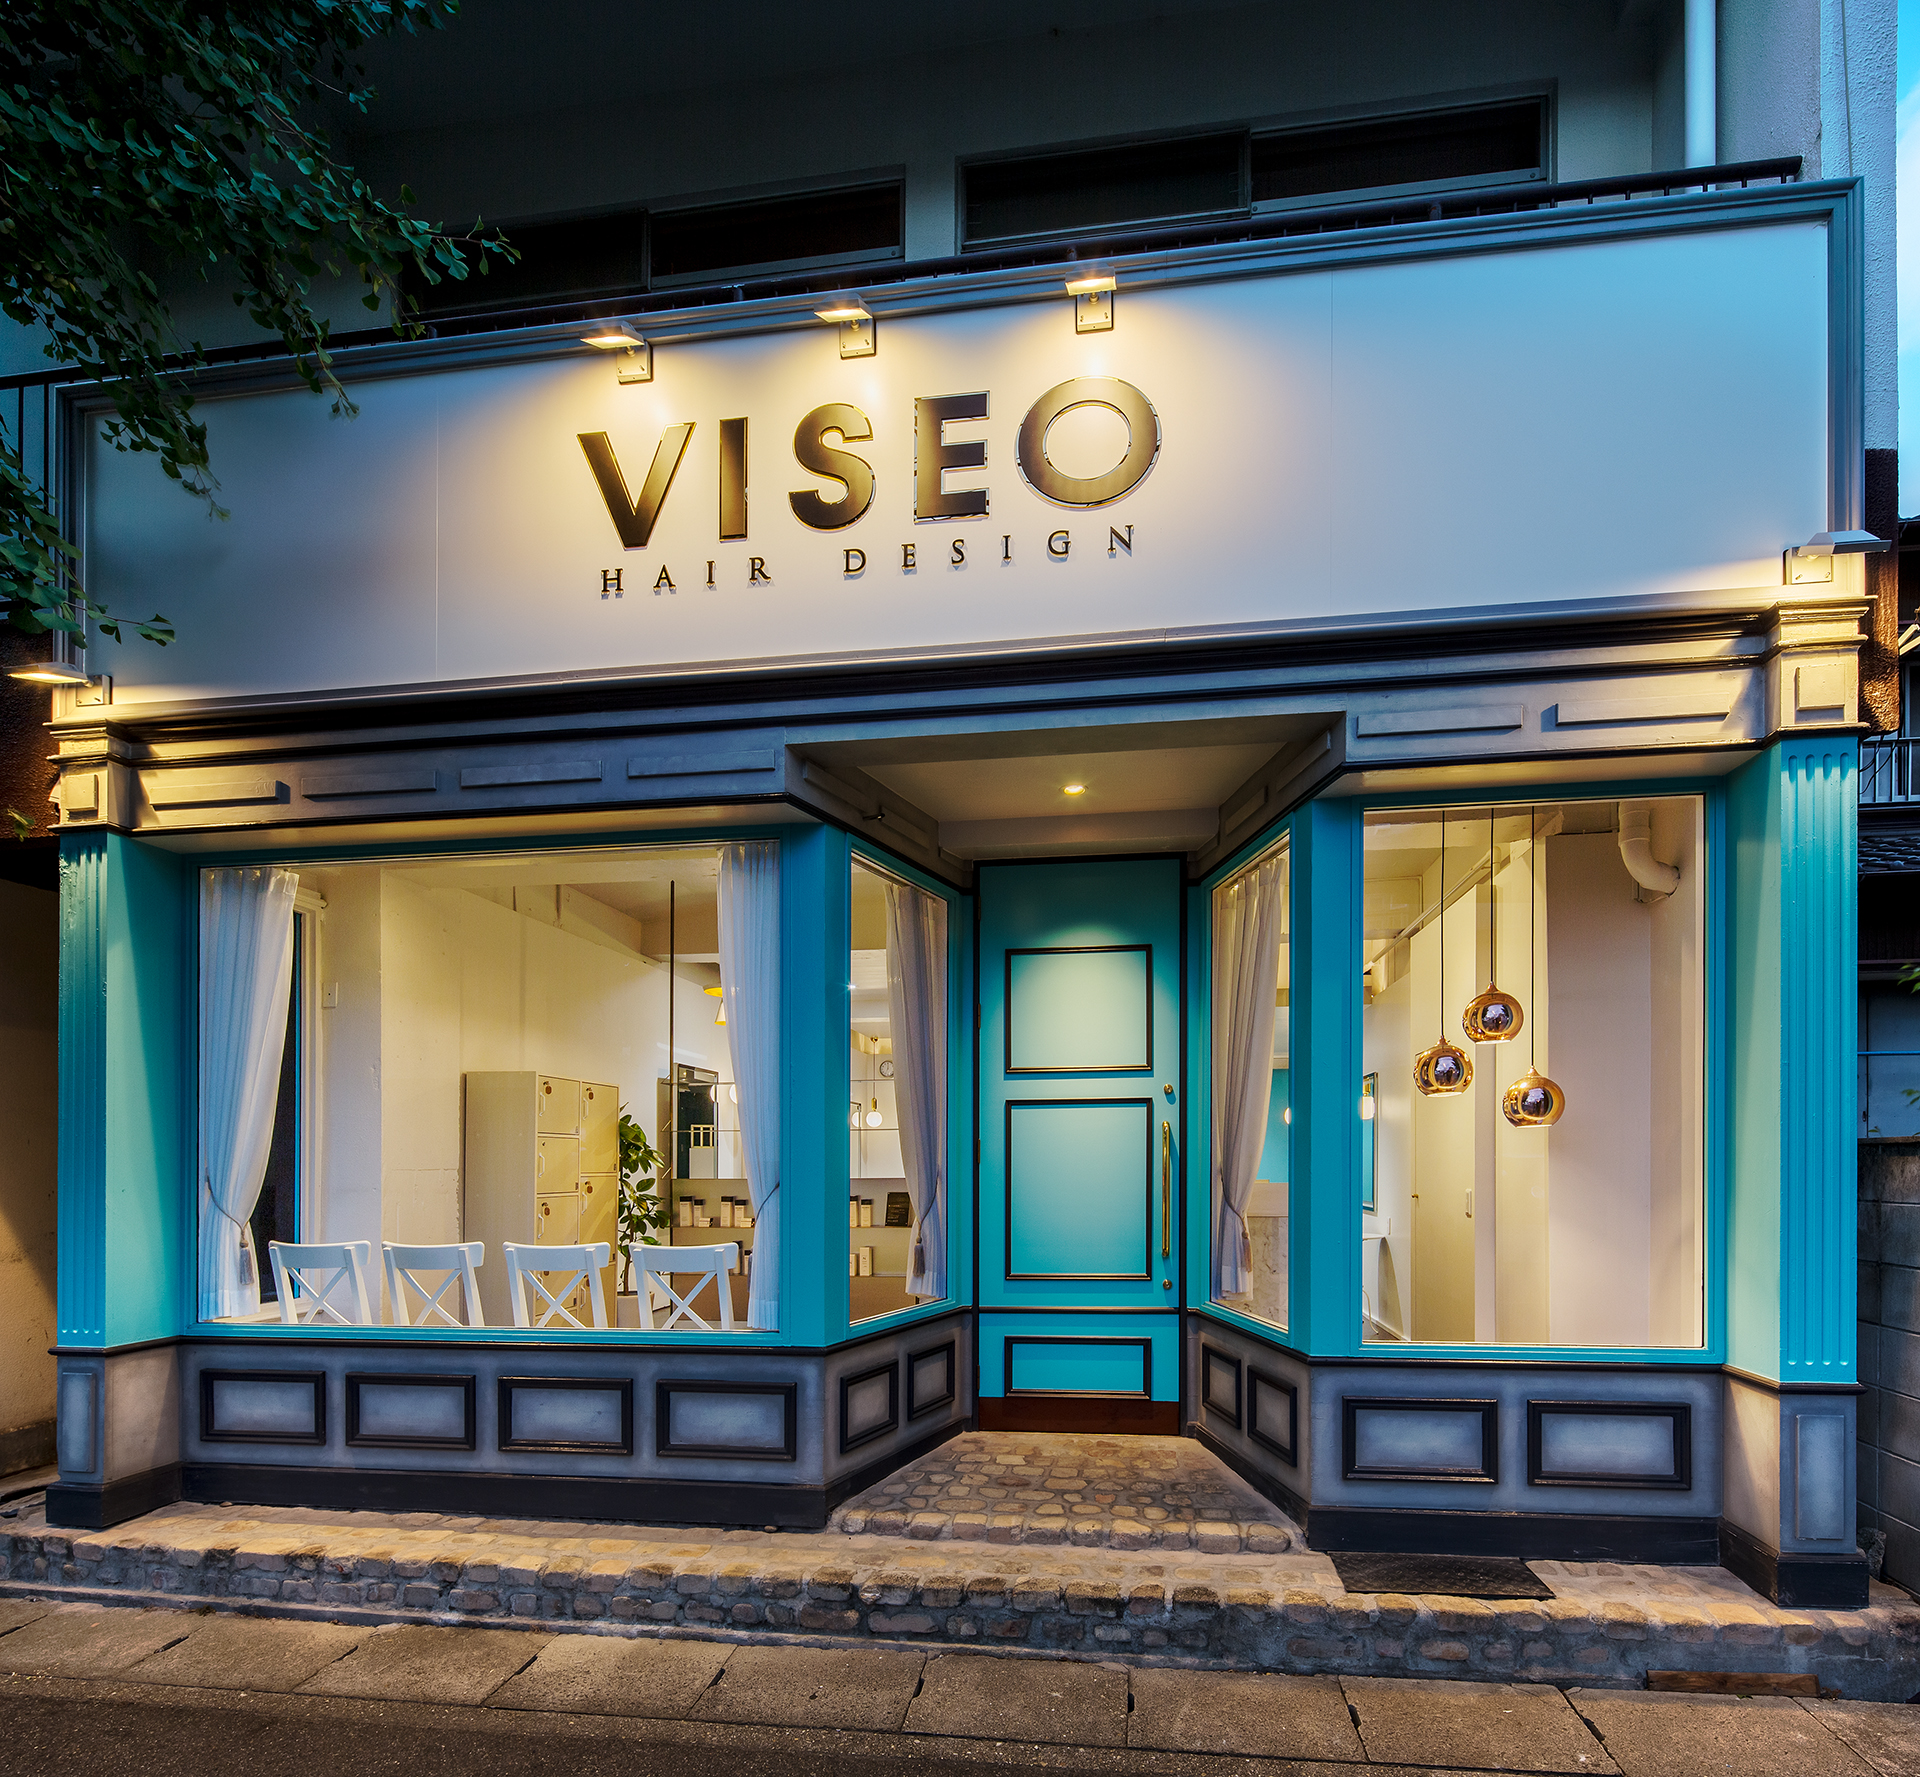 Viseo Hair Design 藤が丘店 名古屋の店舗デザイン 店舗改装 店舗設計はシーズンへ